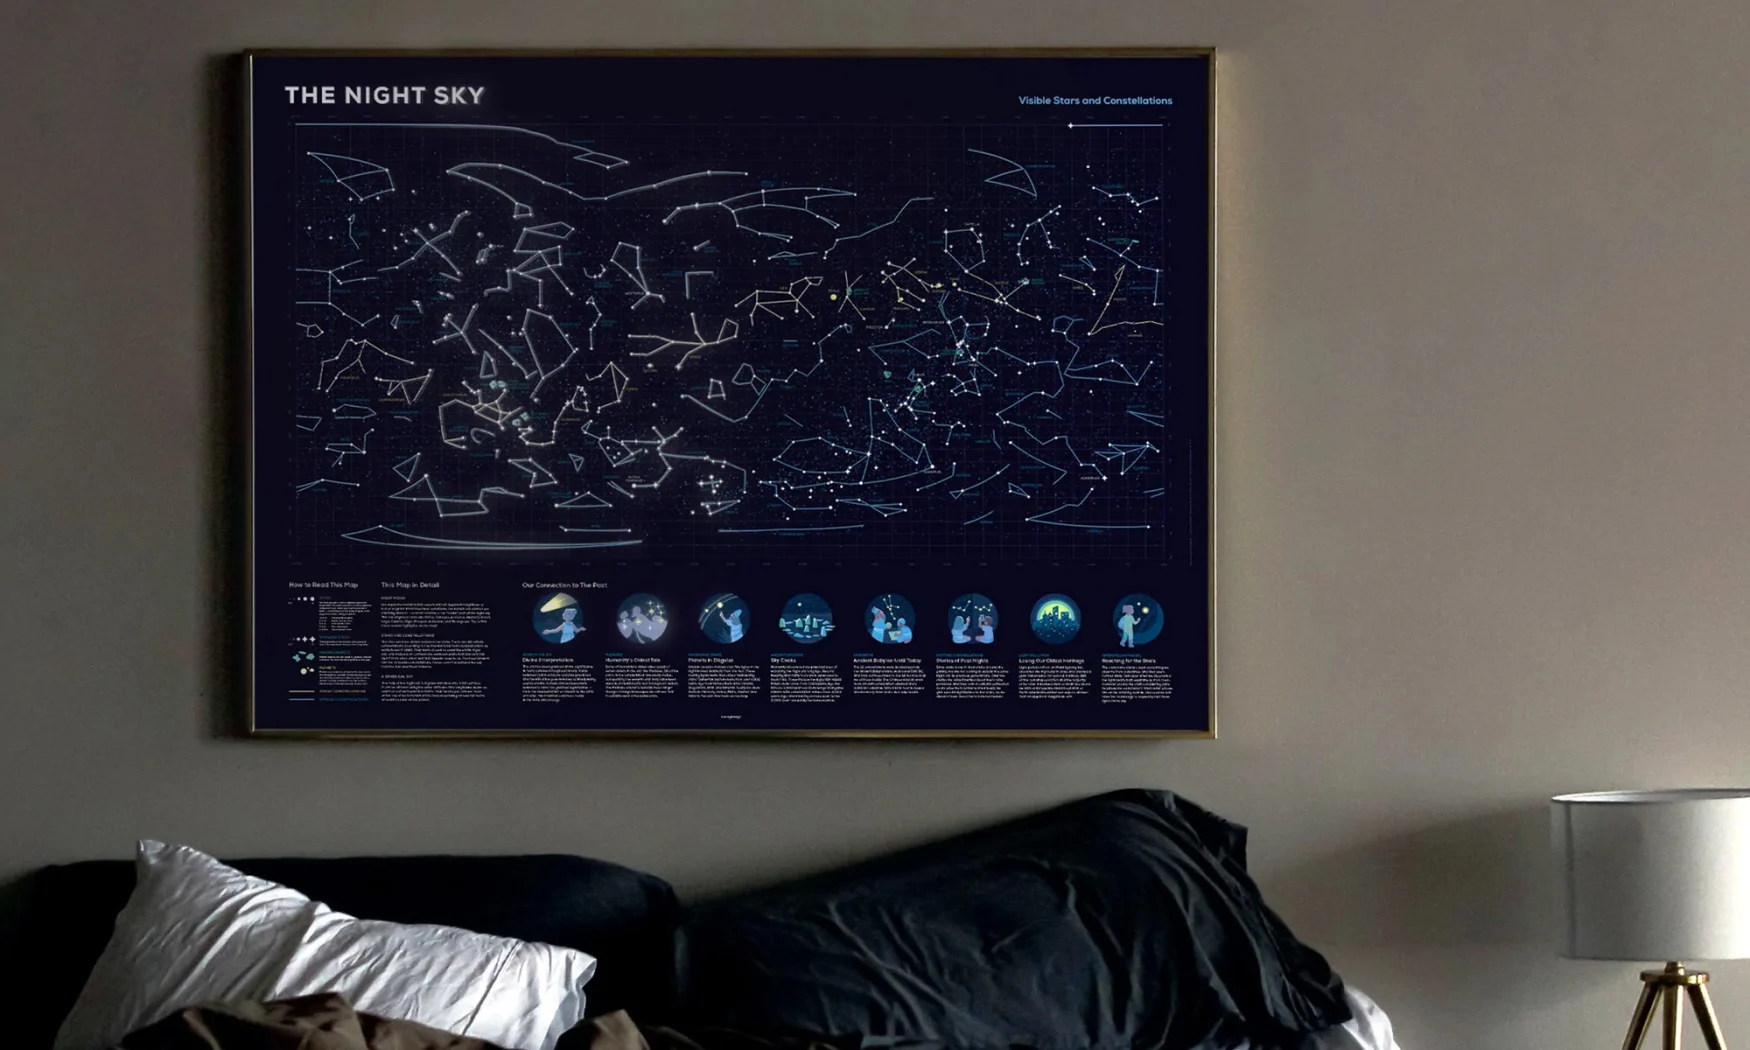 The Night Sky Poster by Kurzgesagt